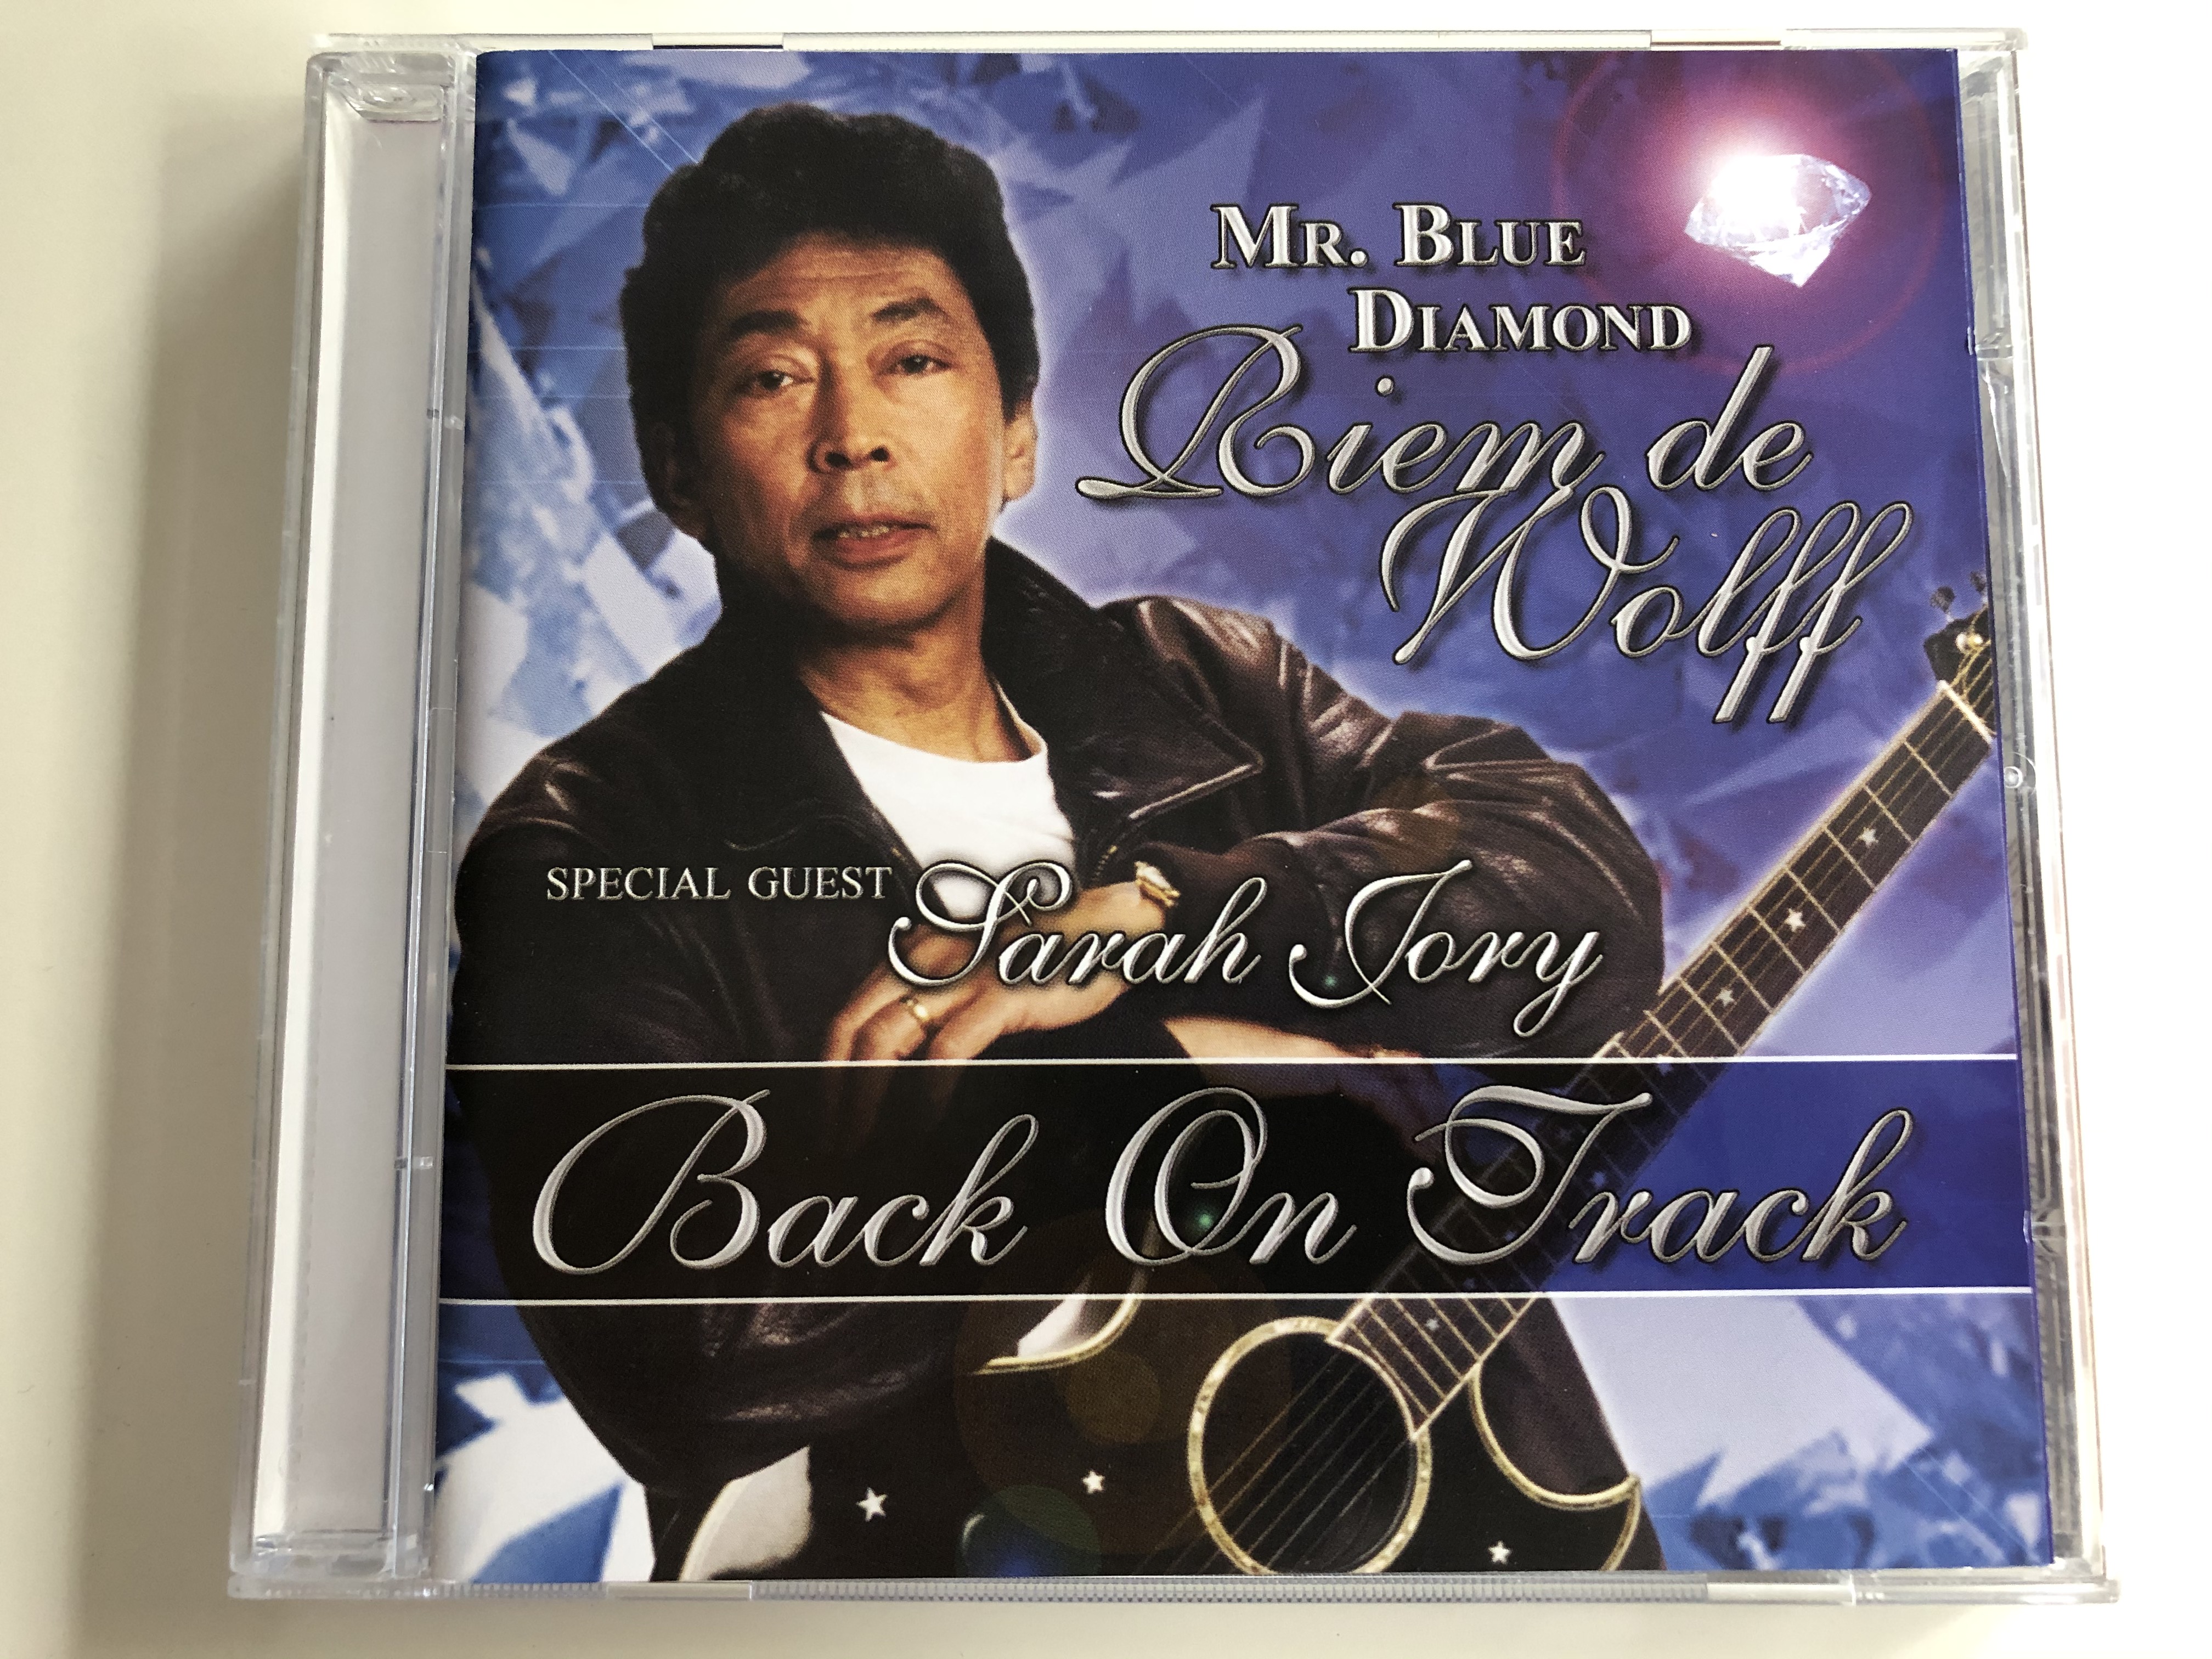 mr.-blue-diamond-biem-de-wolff-special-guest-sarah-jory-back-on-track-zyx-music-audio-cd-2006-zyx-20755-2-1-.jpg